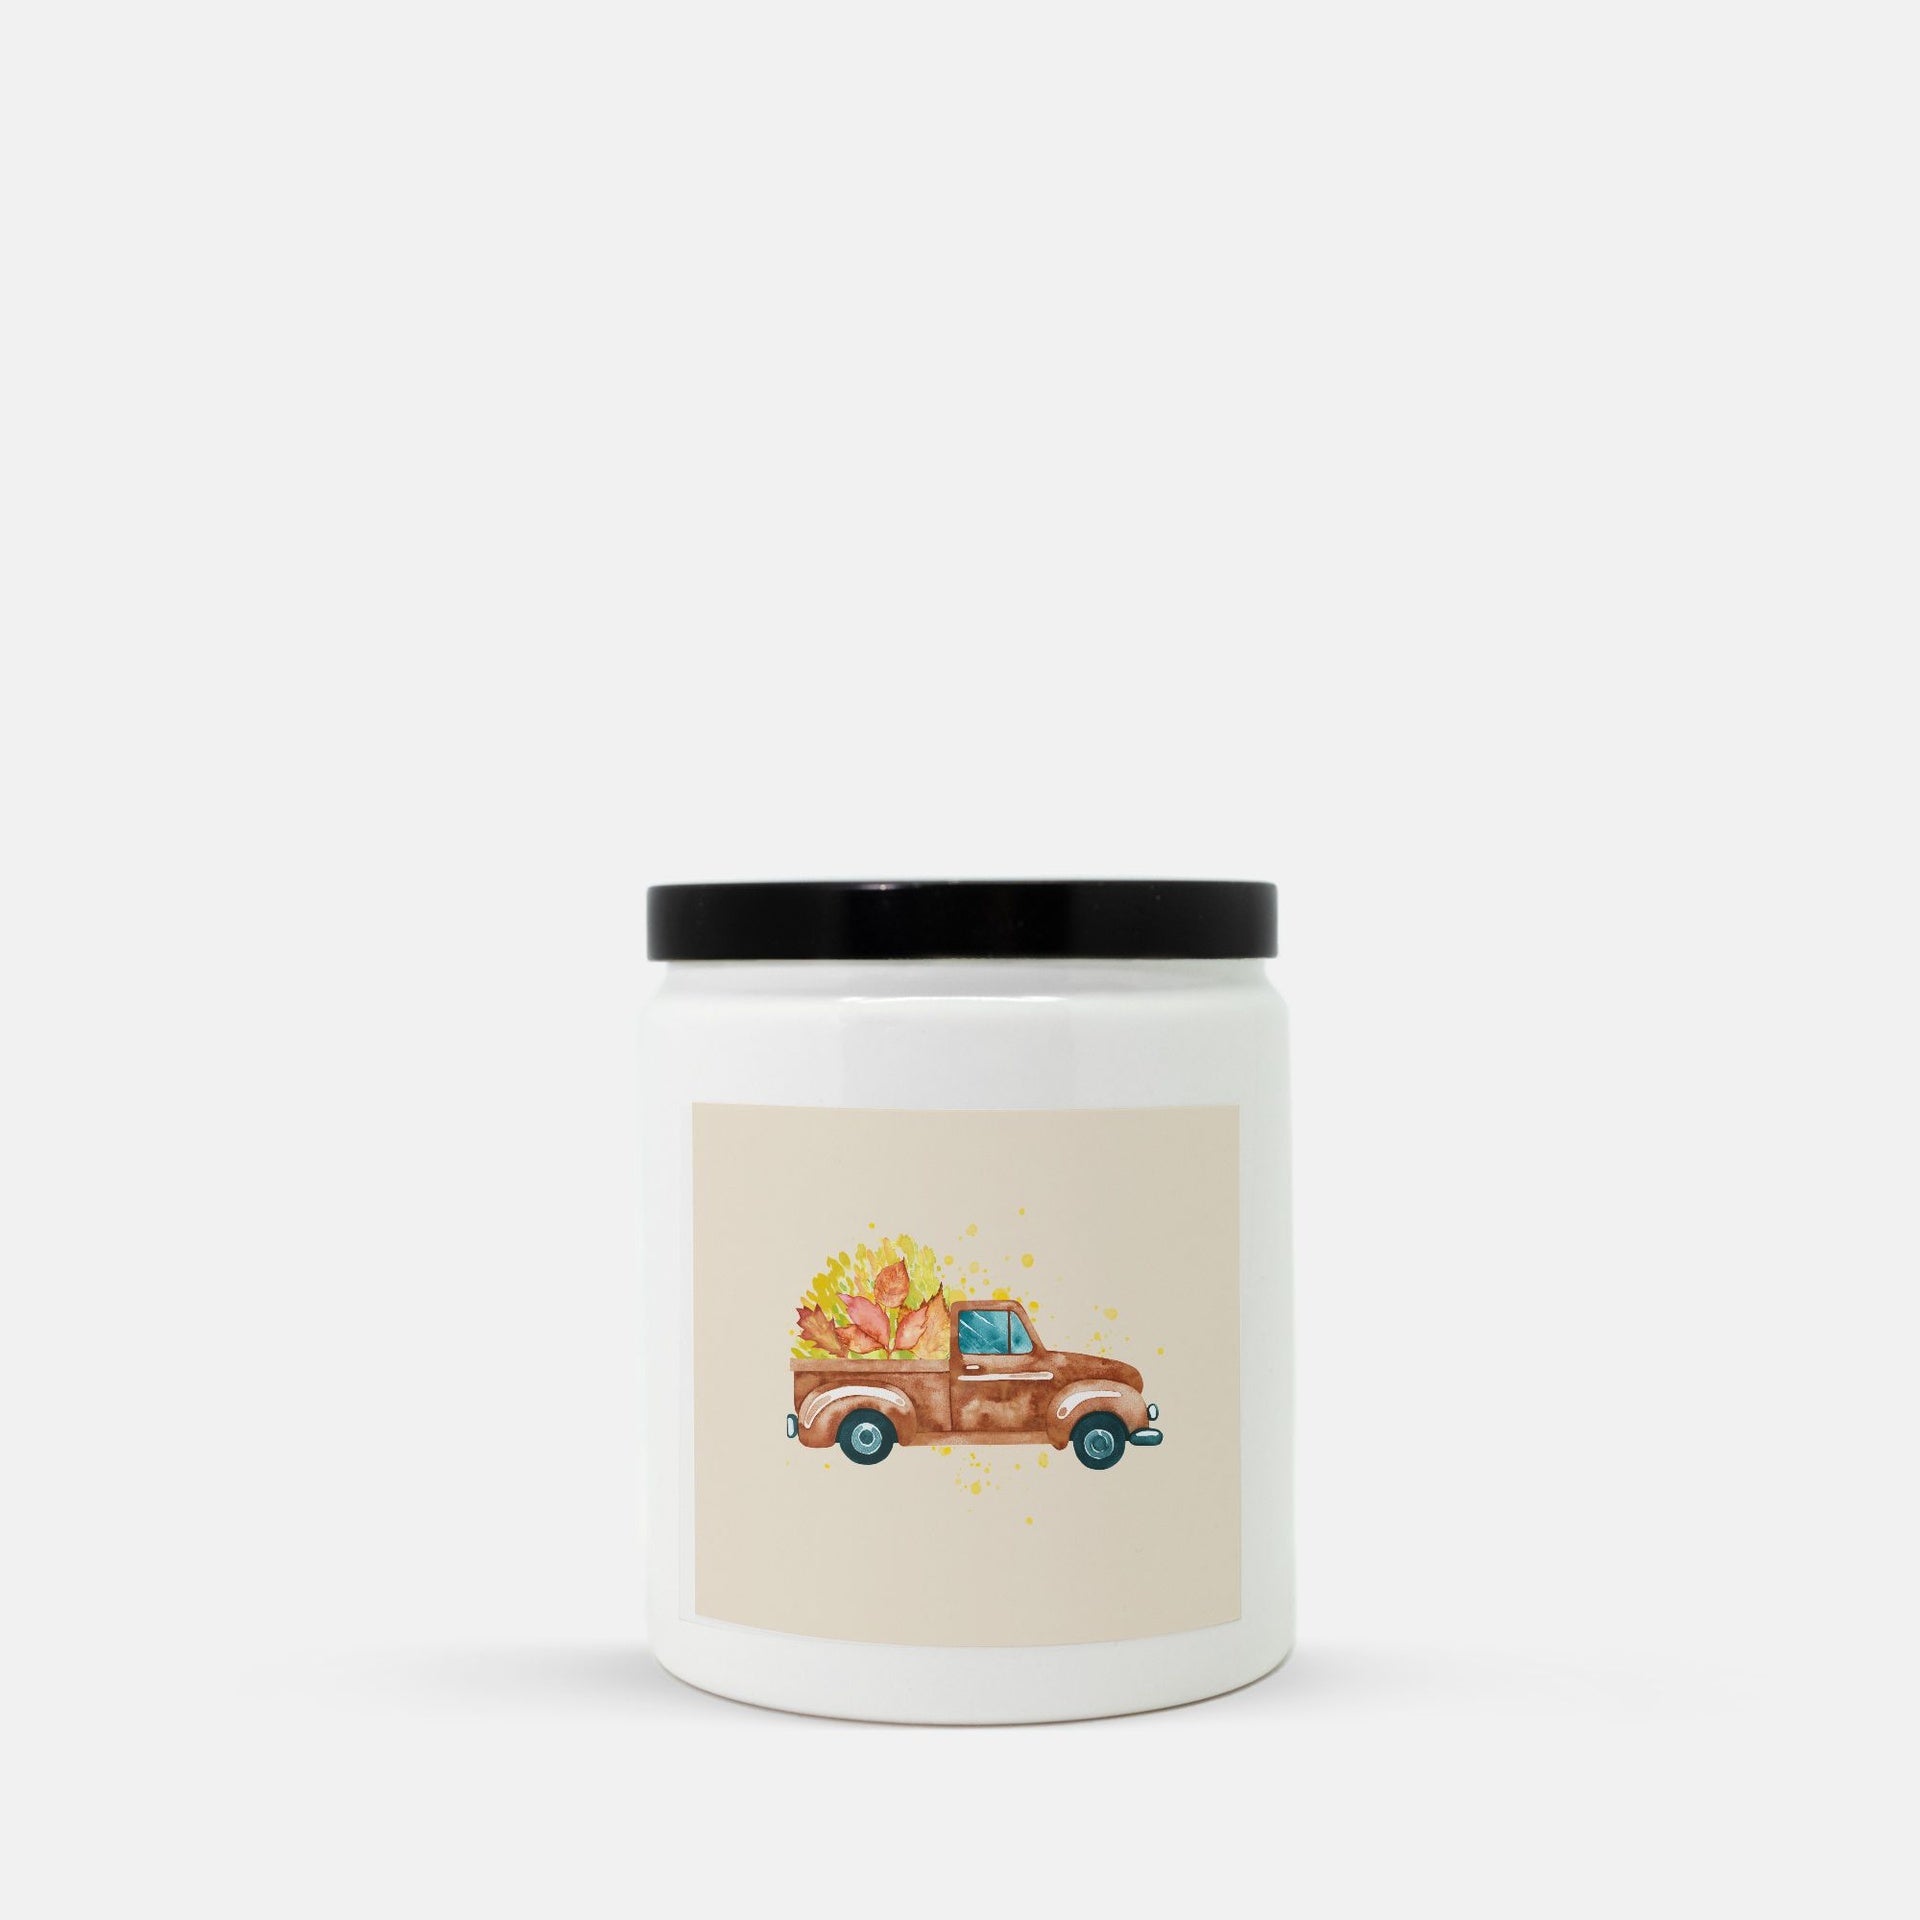 Lifestyle Details - Brown Rustic Truck & Leaves Ceramic Candle w Black Lid - Macintosh